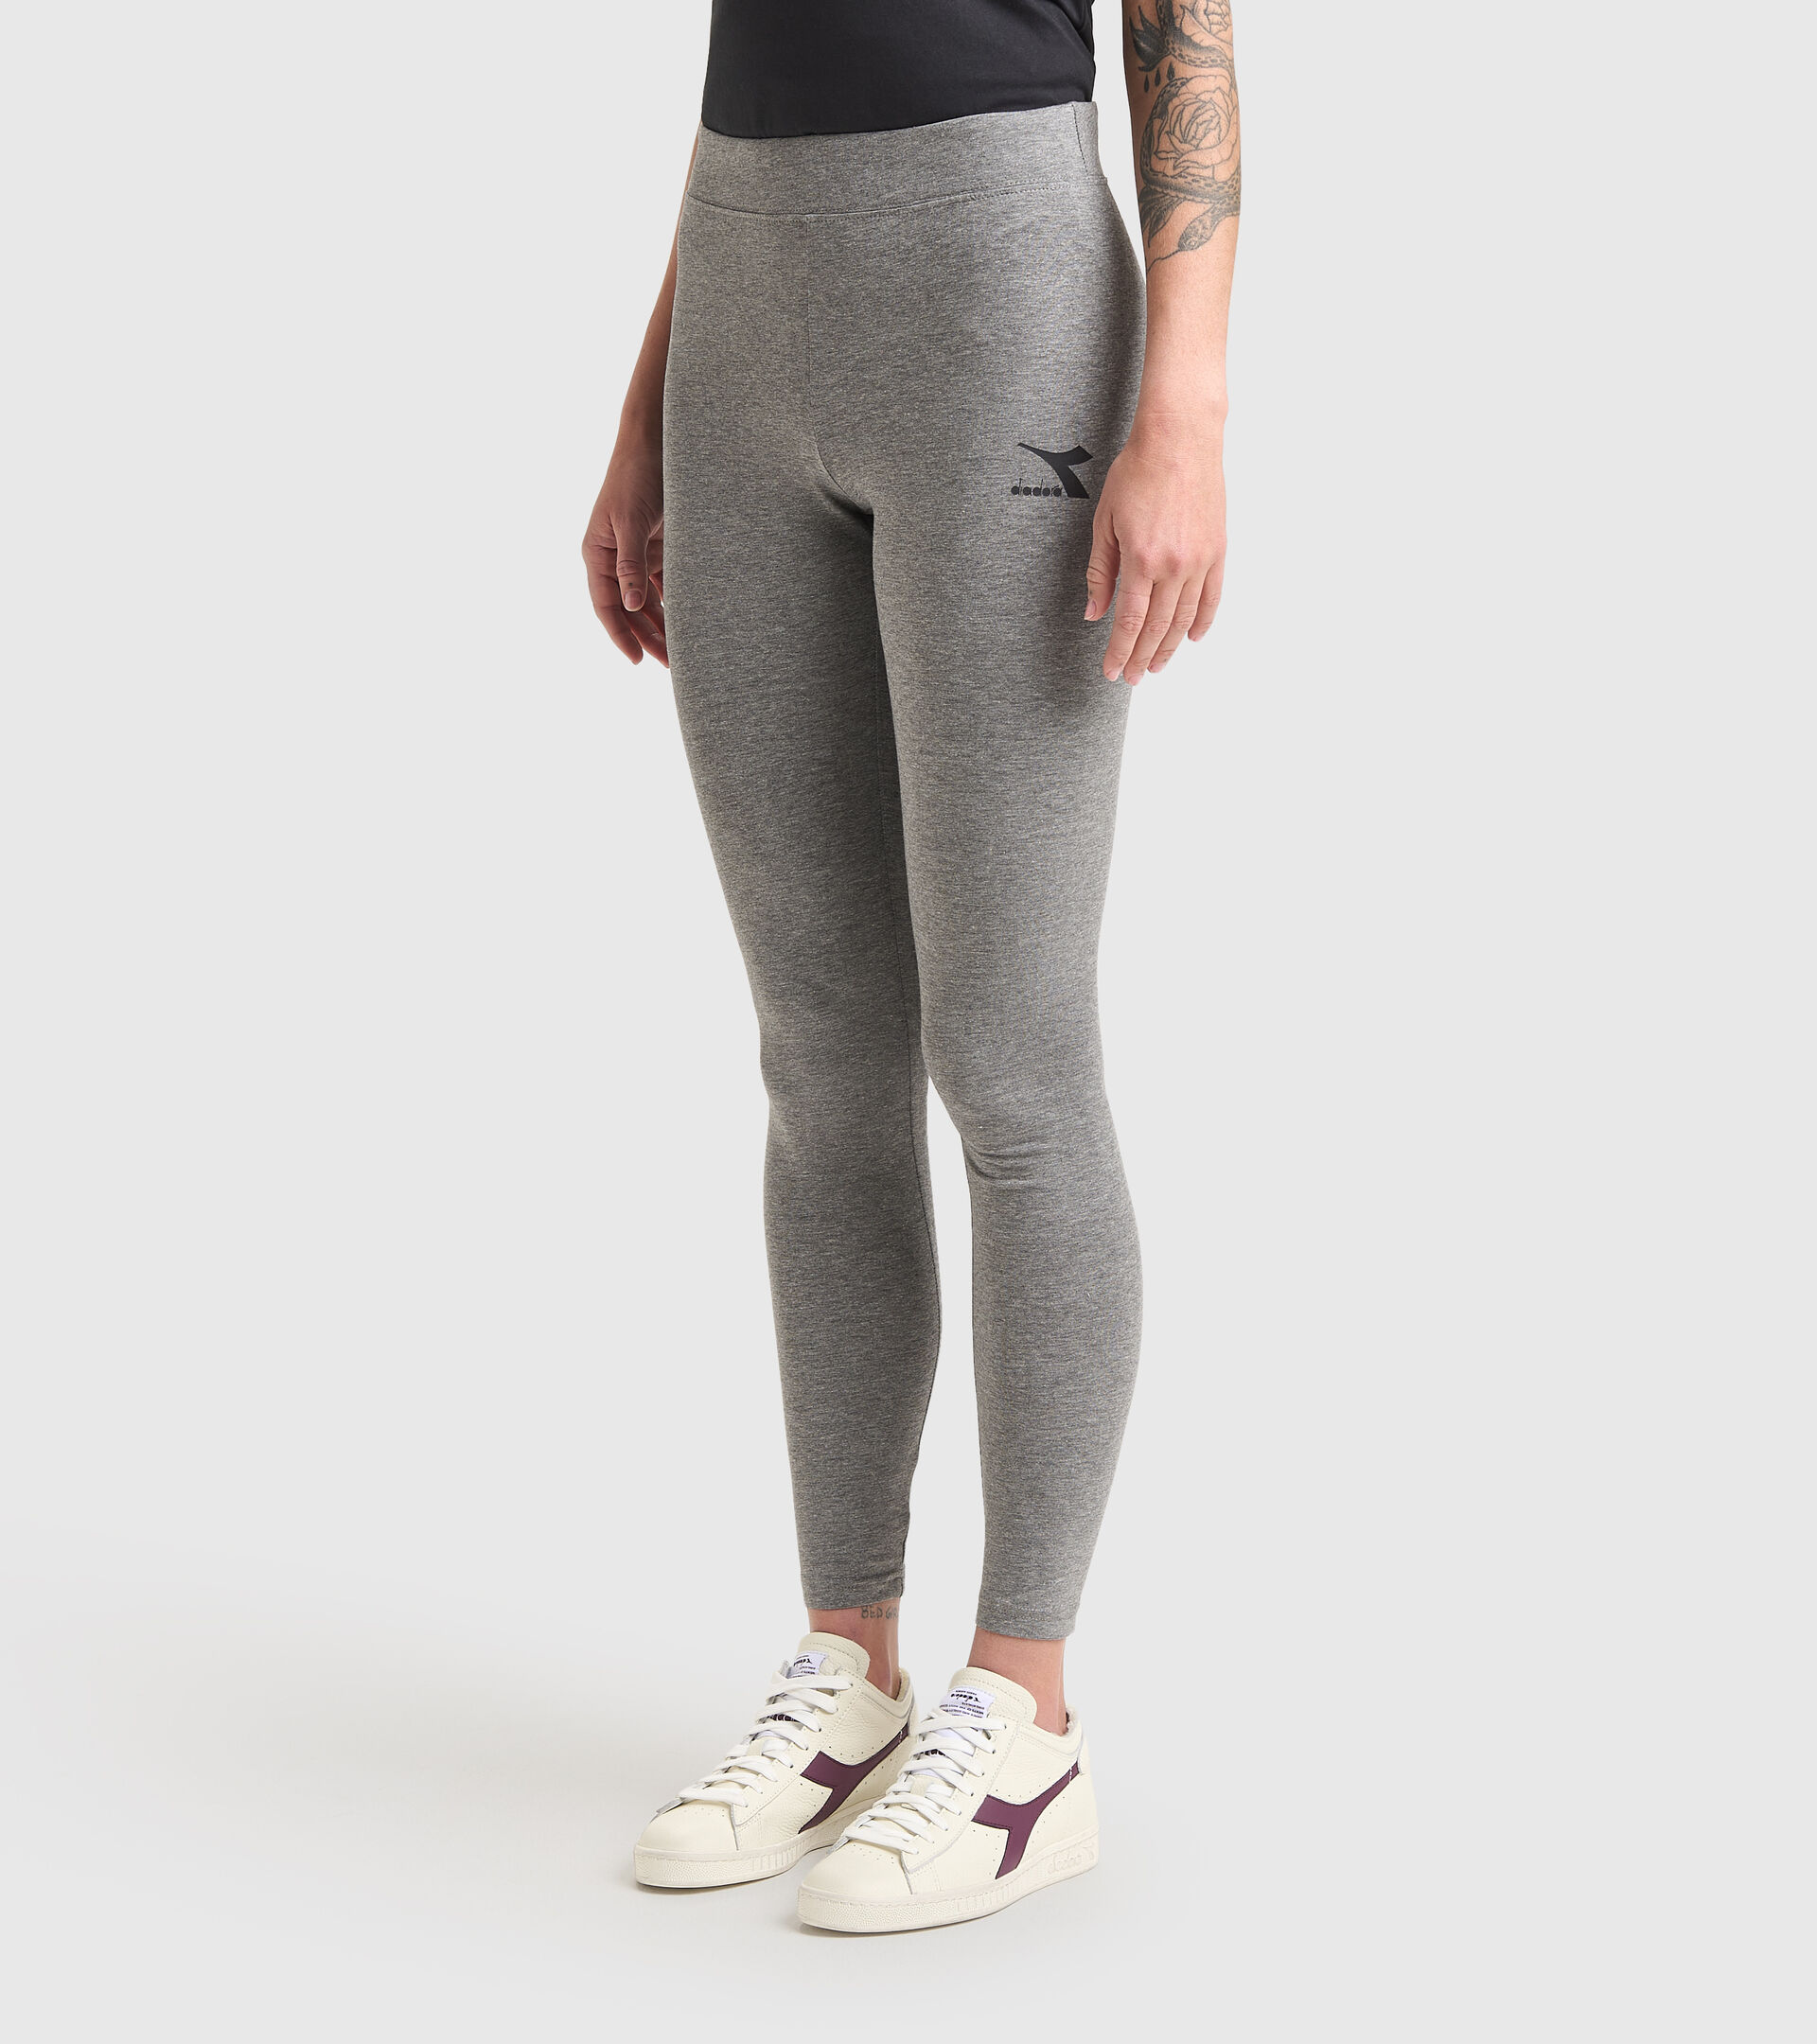 L.LEGGINGS CORE Sports leggings - Women - Diadora Online Store ID